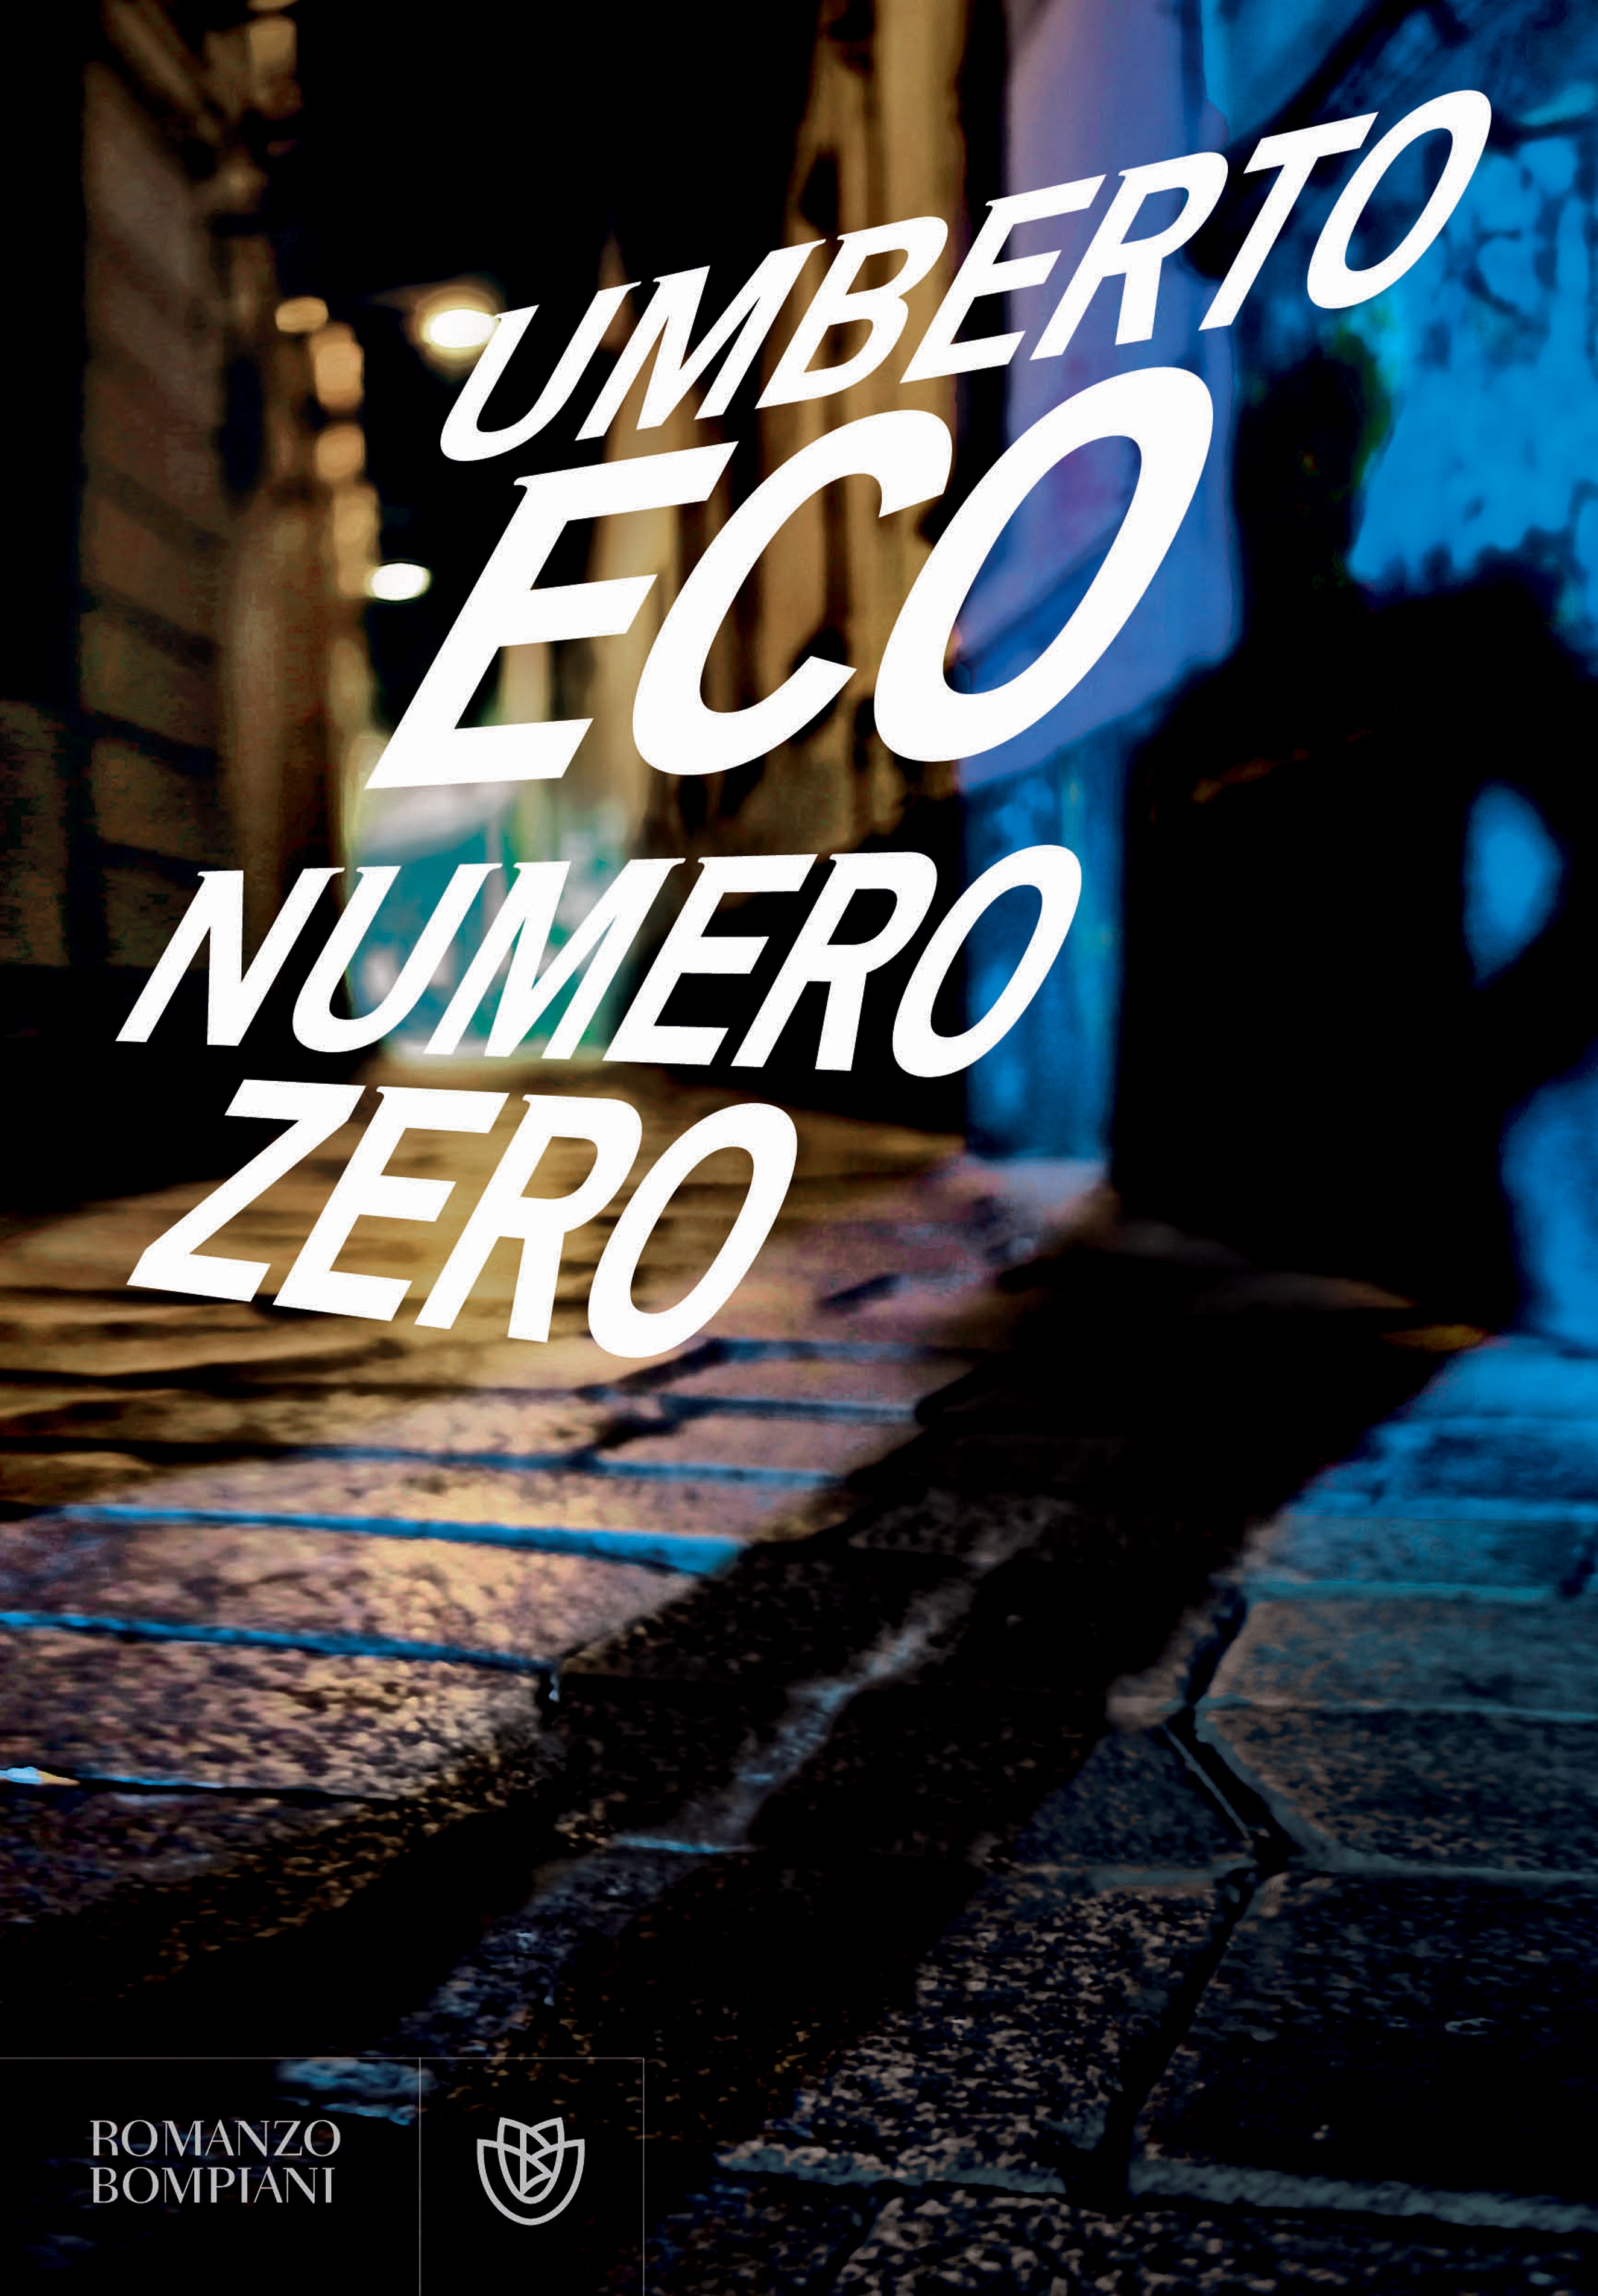 http://www.culturaeculture.it/wp-content/uploads/2015/04/umberto-eco-numero-zero-trama-libro-recensione.jpg